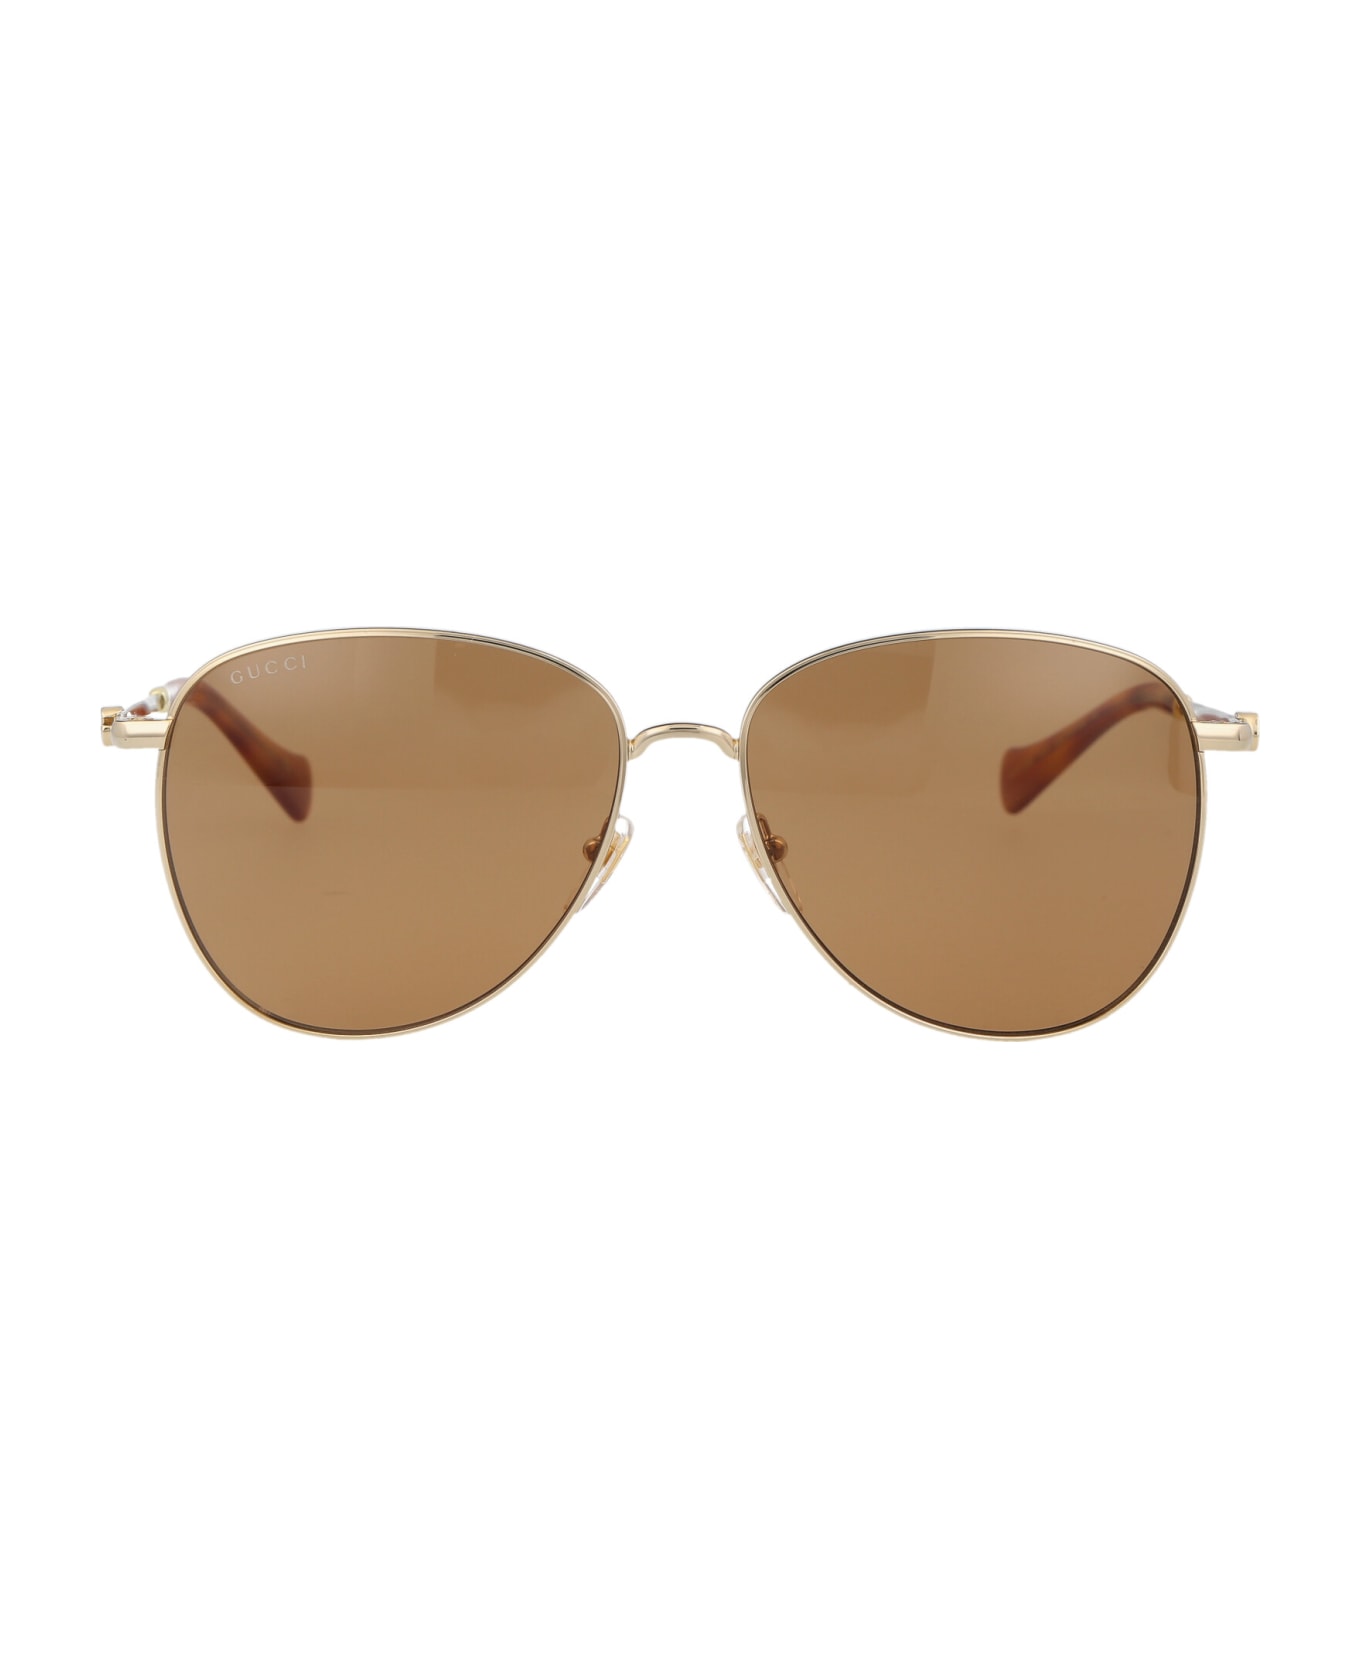 Gucci Eyewear Gg1419s Sunglasses - 002 GOLD GOLD BROWN